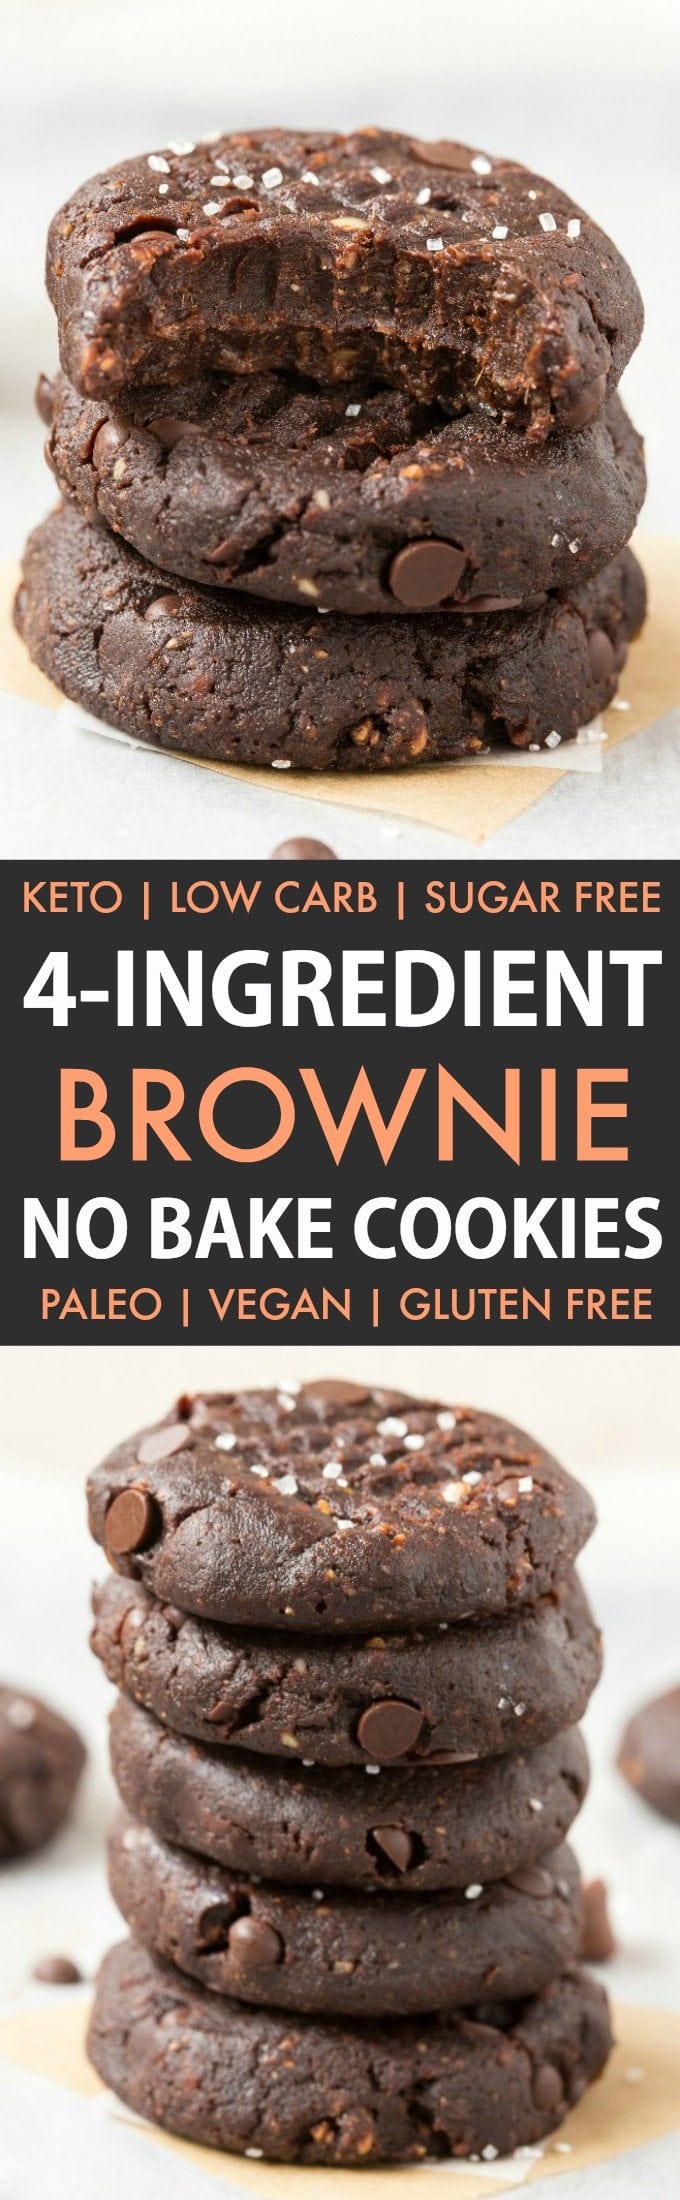 4-Ingredient No Bake Brownie Cookies in a collage